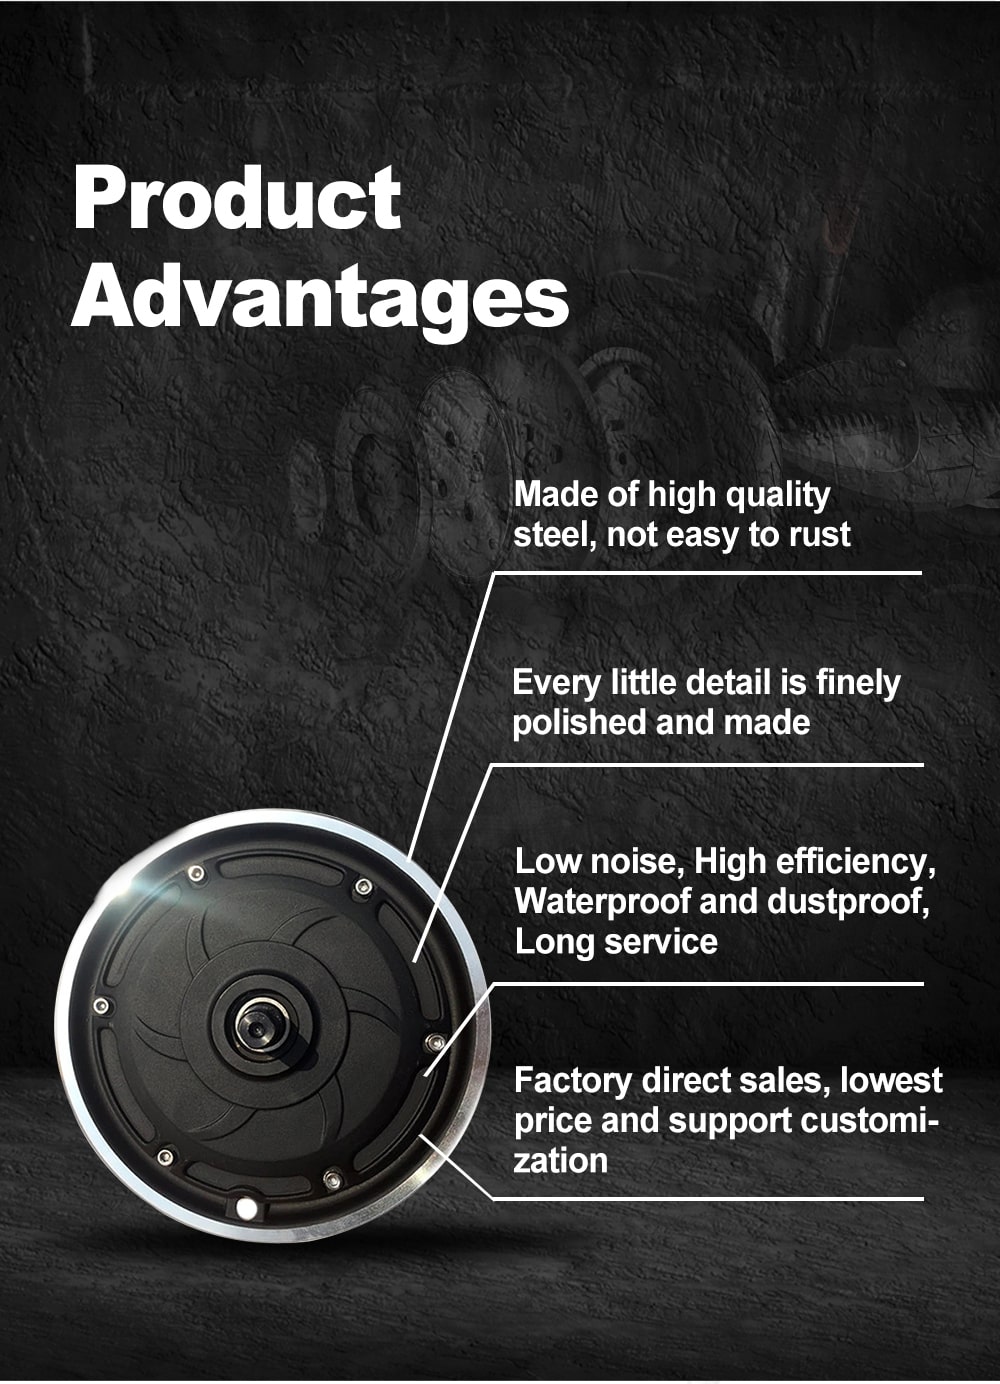 10 inch geard hub motor advantages 